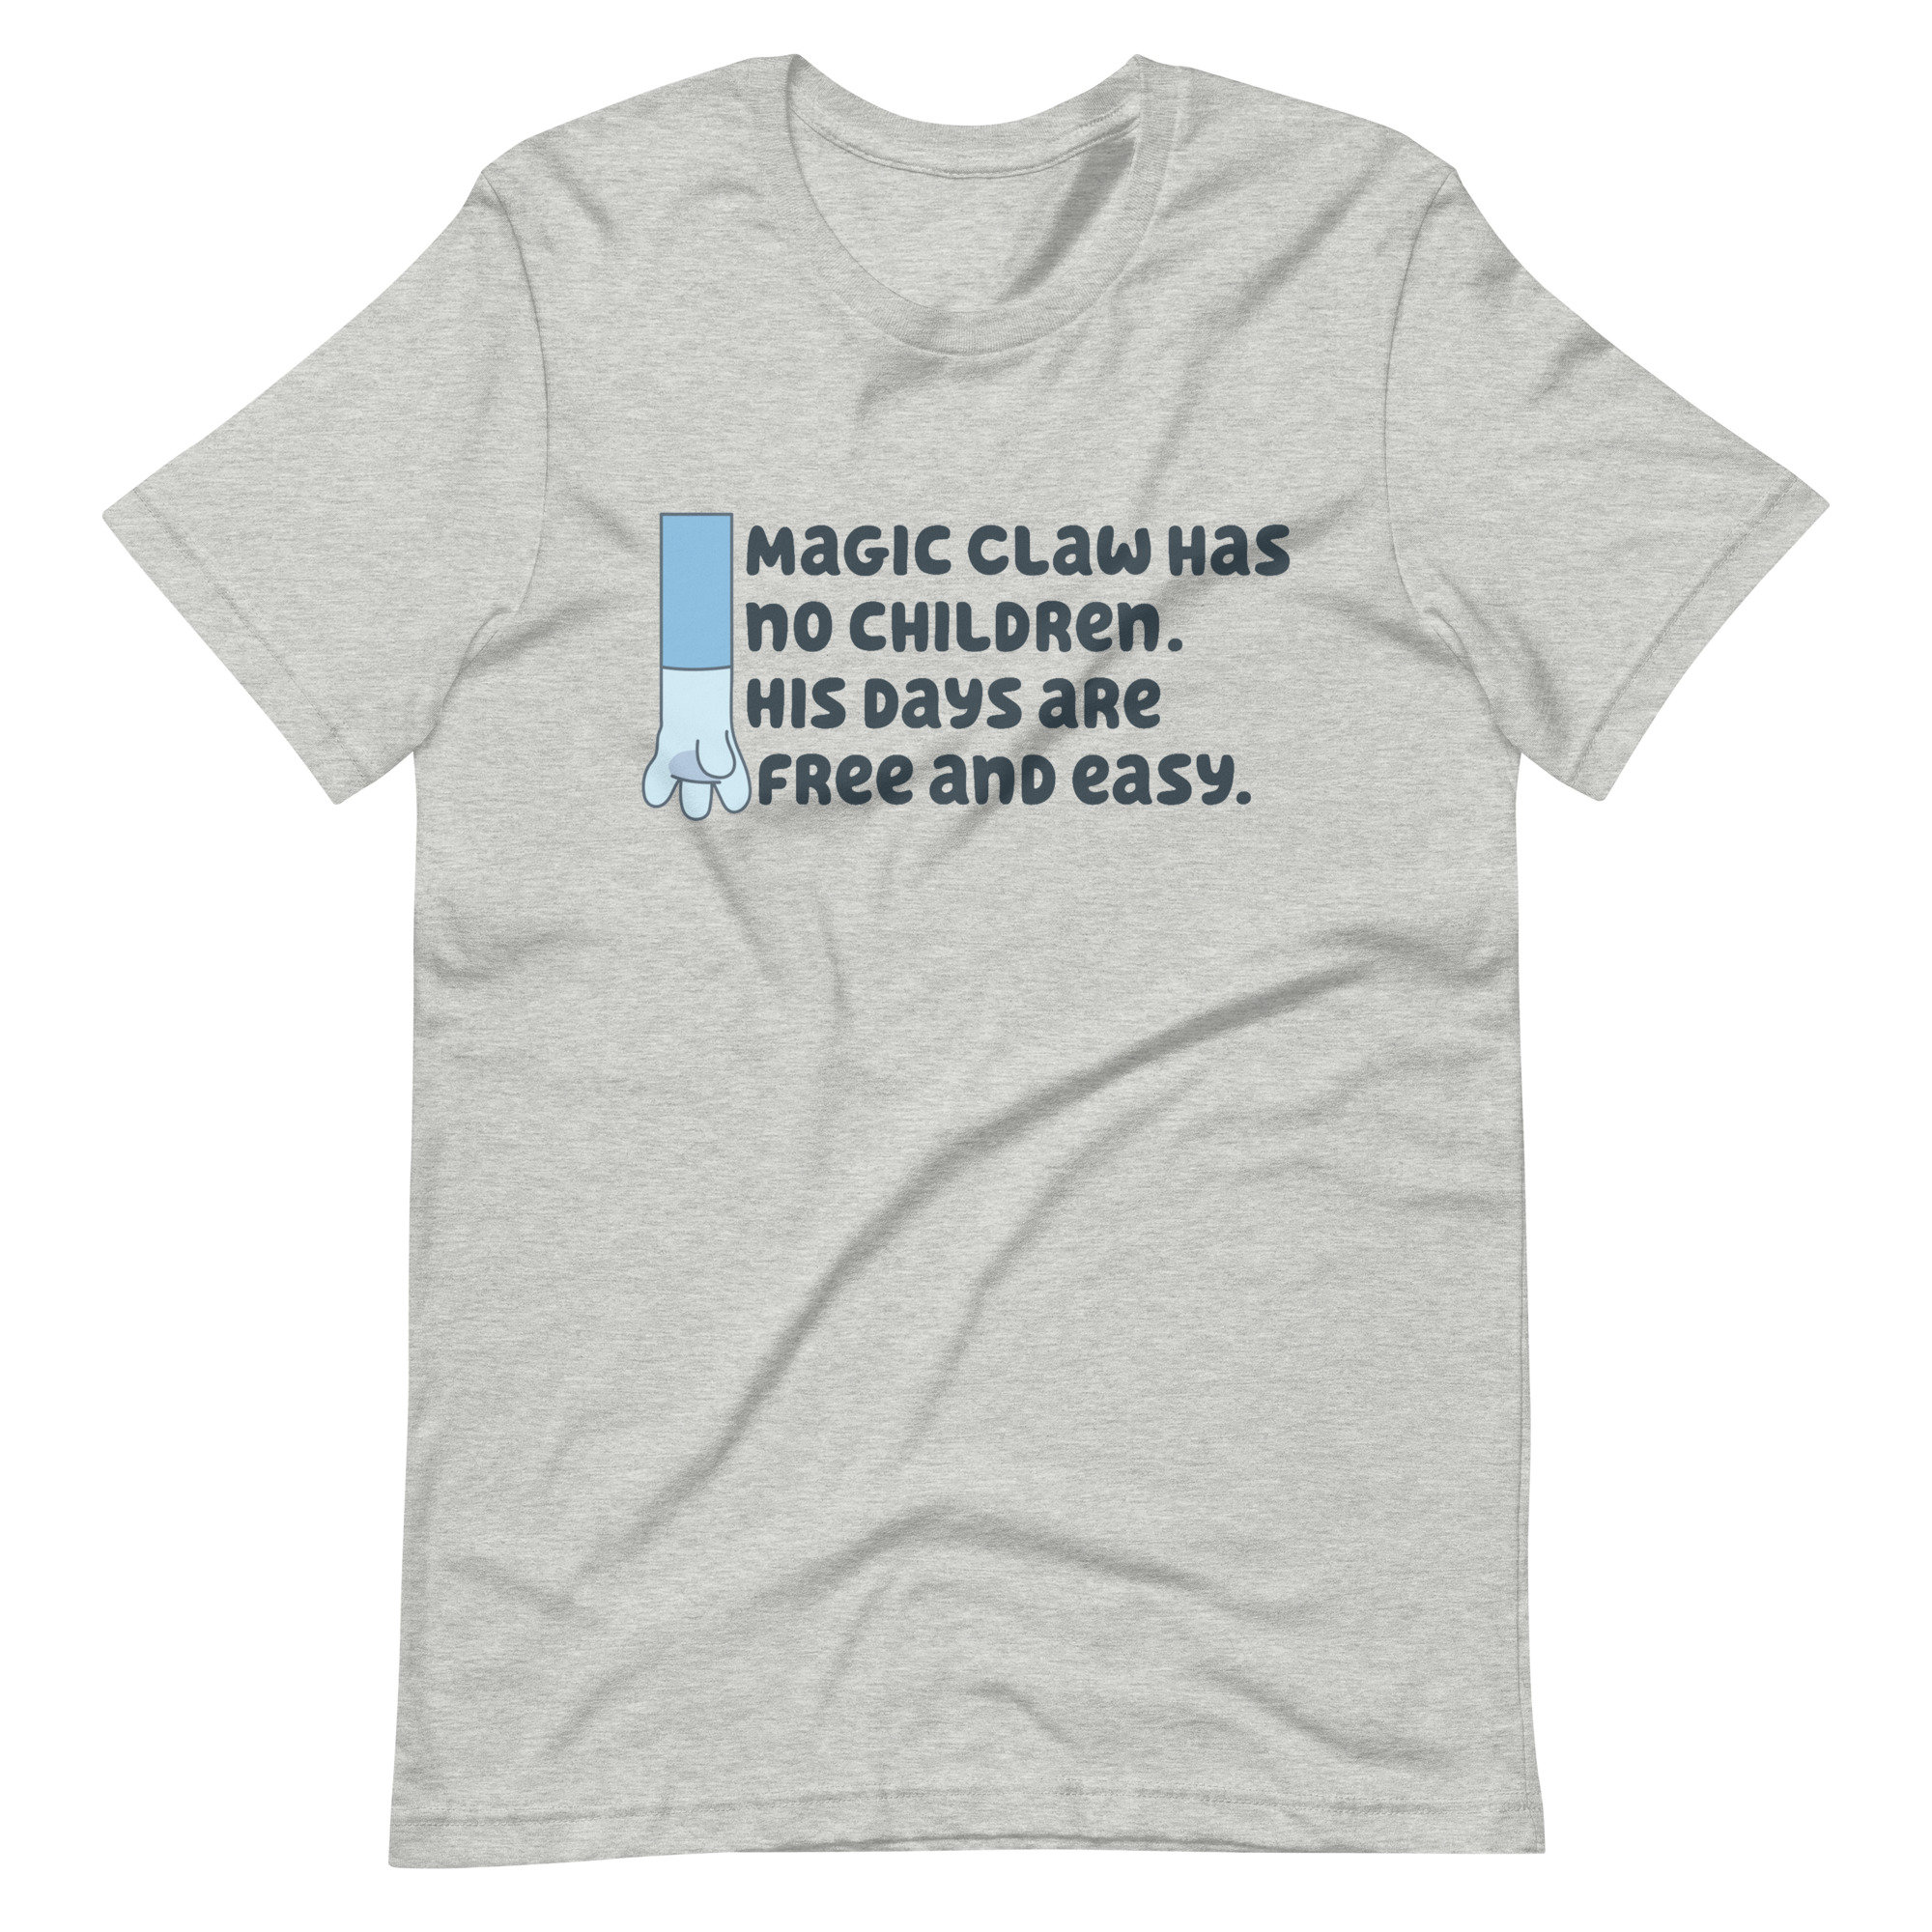 Magic Claw has no Children Tee, Blue Heeler, Cute Kid's Show Shirt, Popular Now Sticker, Best Selling T-Shirt